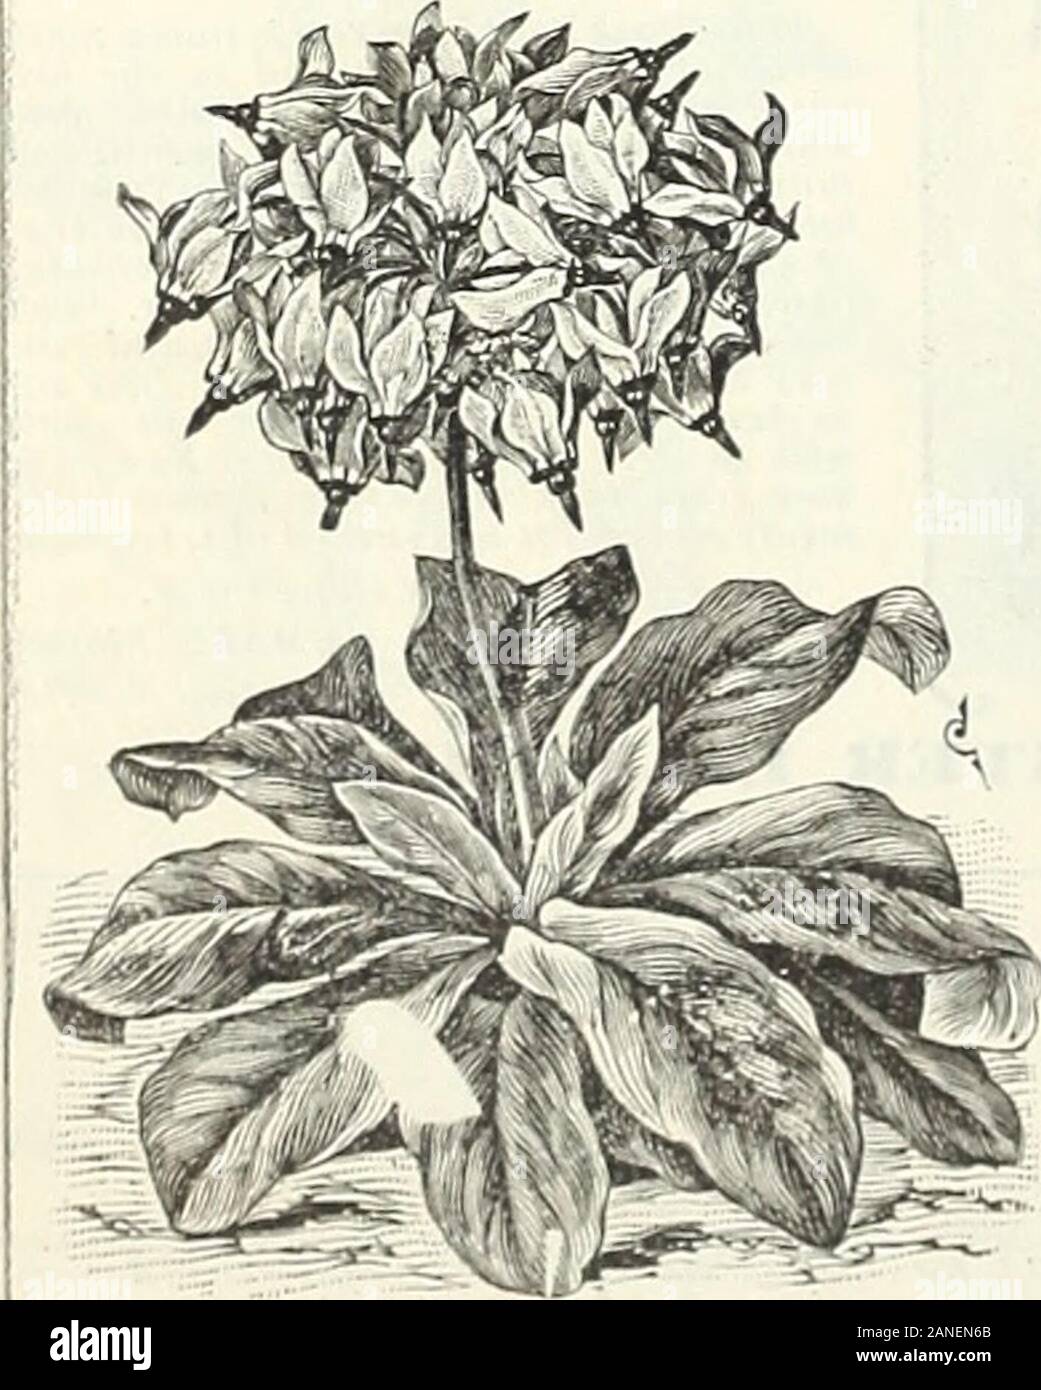 Autumn bulb catalogue : 1900 . AMORPHOPHALHS.. AMEHirAN fowMi.ii oil iiDiinrATnpoN. ACHIMENES. These .Tre splenilid jint] pr()fn.«e snninier-lildOiiiiiiK plants for tlie loiiservatoryor warm window sanien: flowers of many cliarniing: colors,ranging: tliroiiKi all shades from white to crimson, includingmany beantifully spotted. (.Speeuf.) (lieuUy in .ovpiuher.) Magnet. Blue and violet Feriana. Bright scarlet Pulchella. Blue and white Xiady Littleton. Dark violet and crimson Mrs. Bmnow. Violet blue Ele^ans. Wmiilion The above 6 iiiuiin] Achimenes, 1 bulb each, 50c.; 3 eatli, $1.25.Mixed Varieti Stock Photo